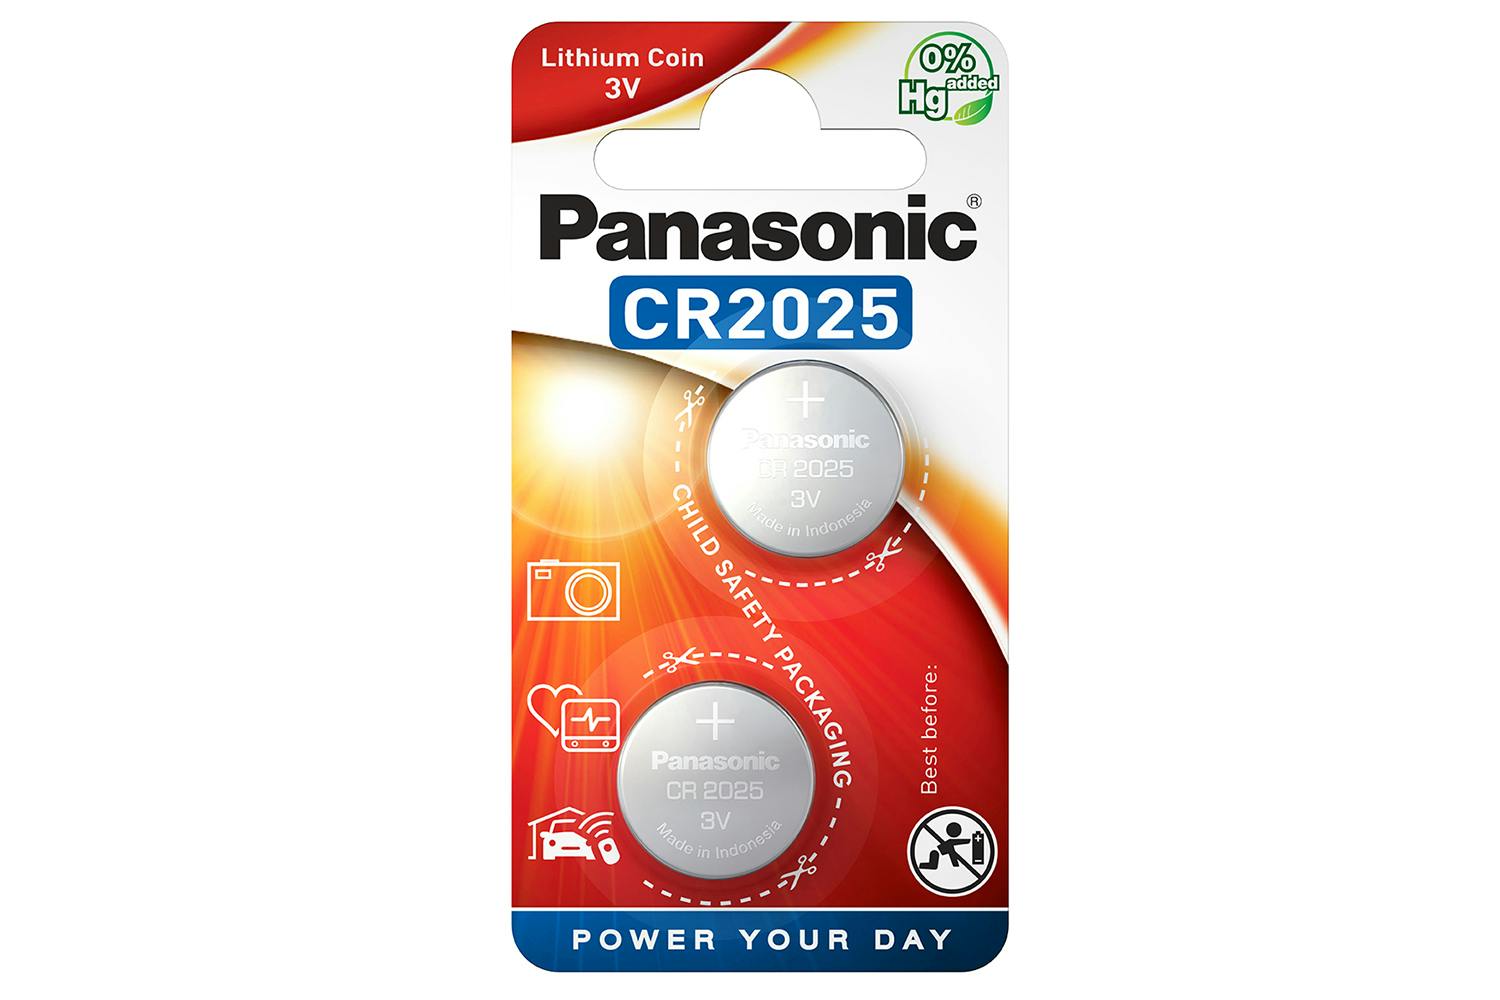 Panasonic CR2025-4 CR2025 3V Lithium Coin Battery (Pack of 4)